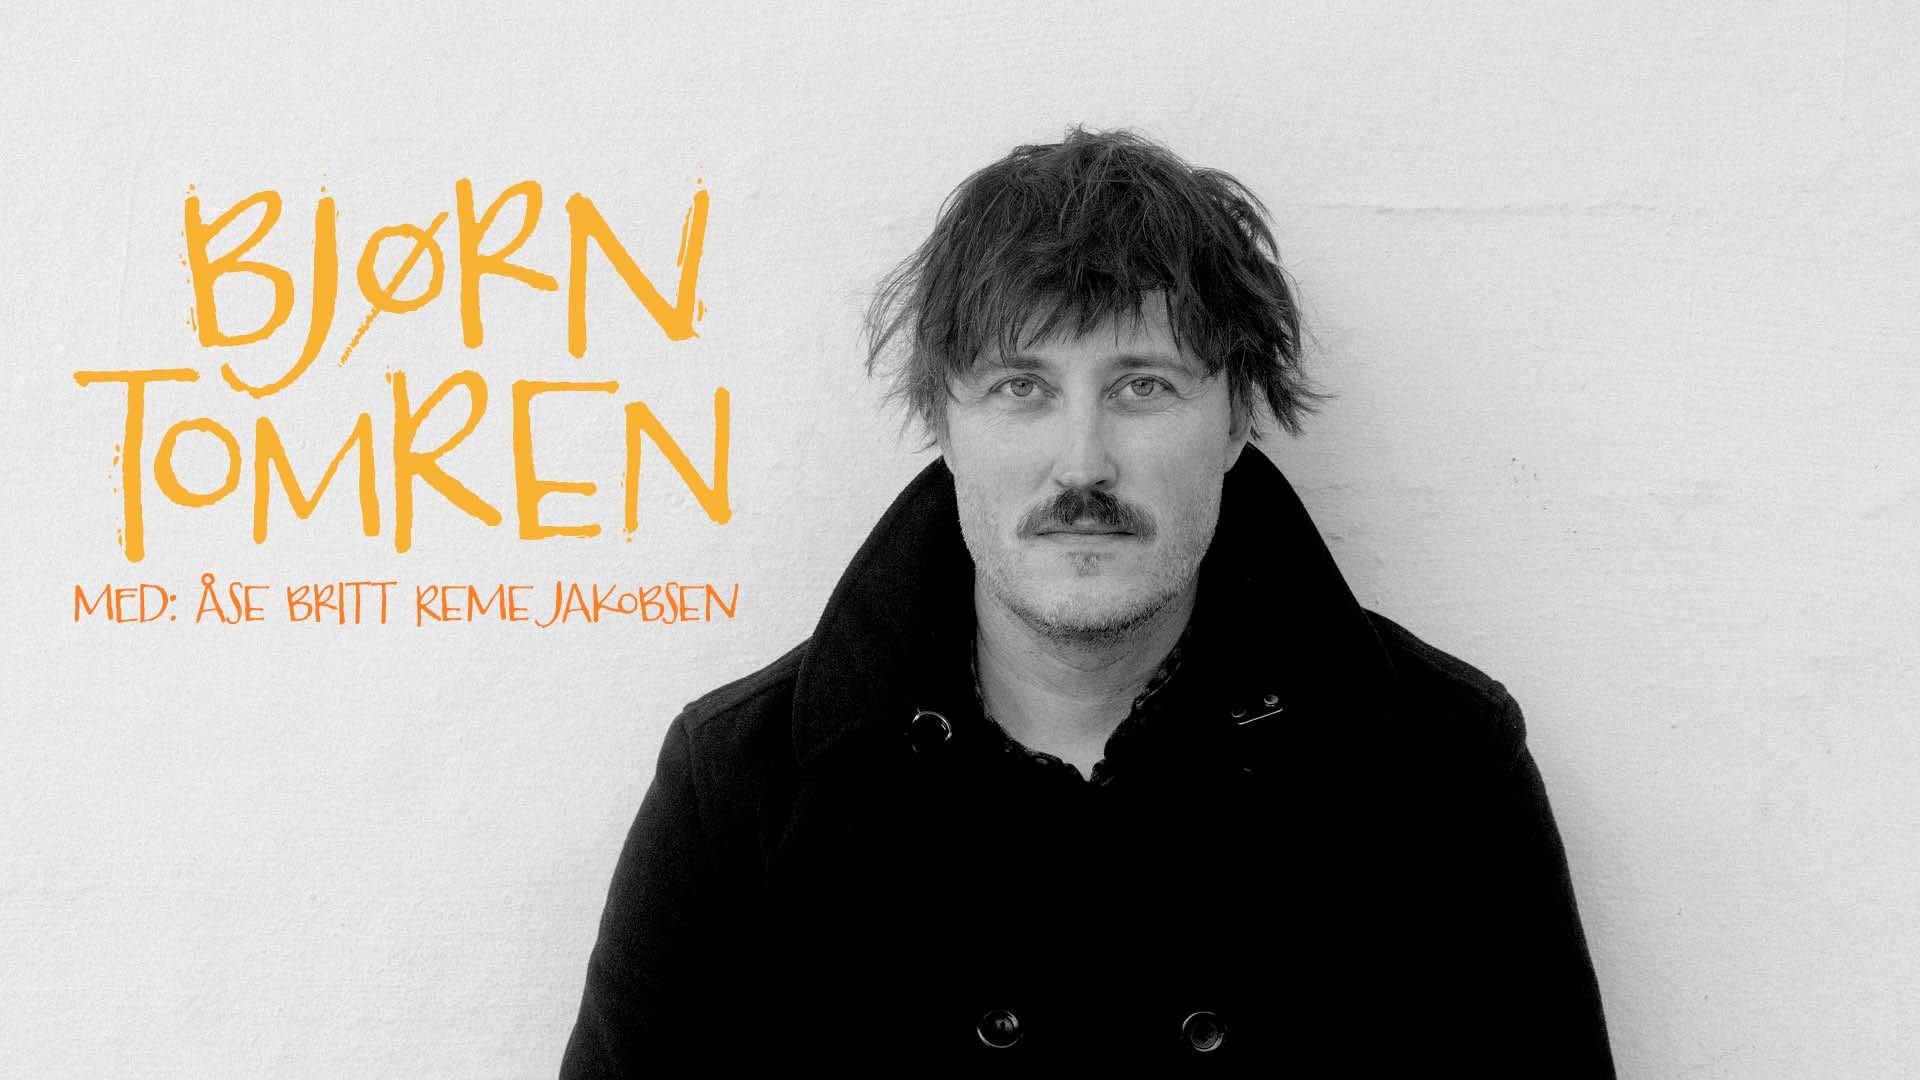 Concert with Bjørn Tomren